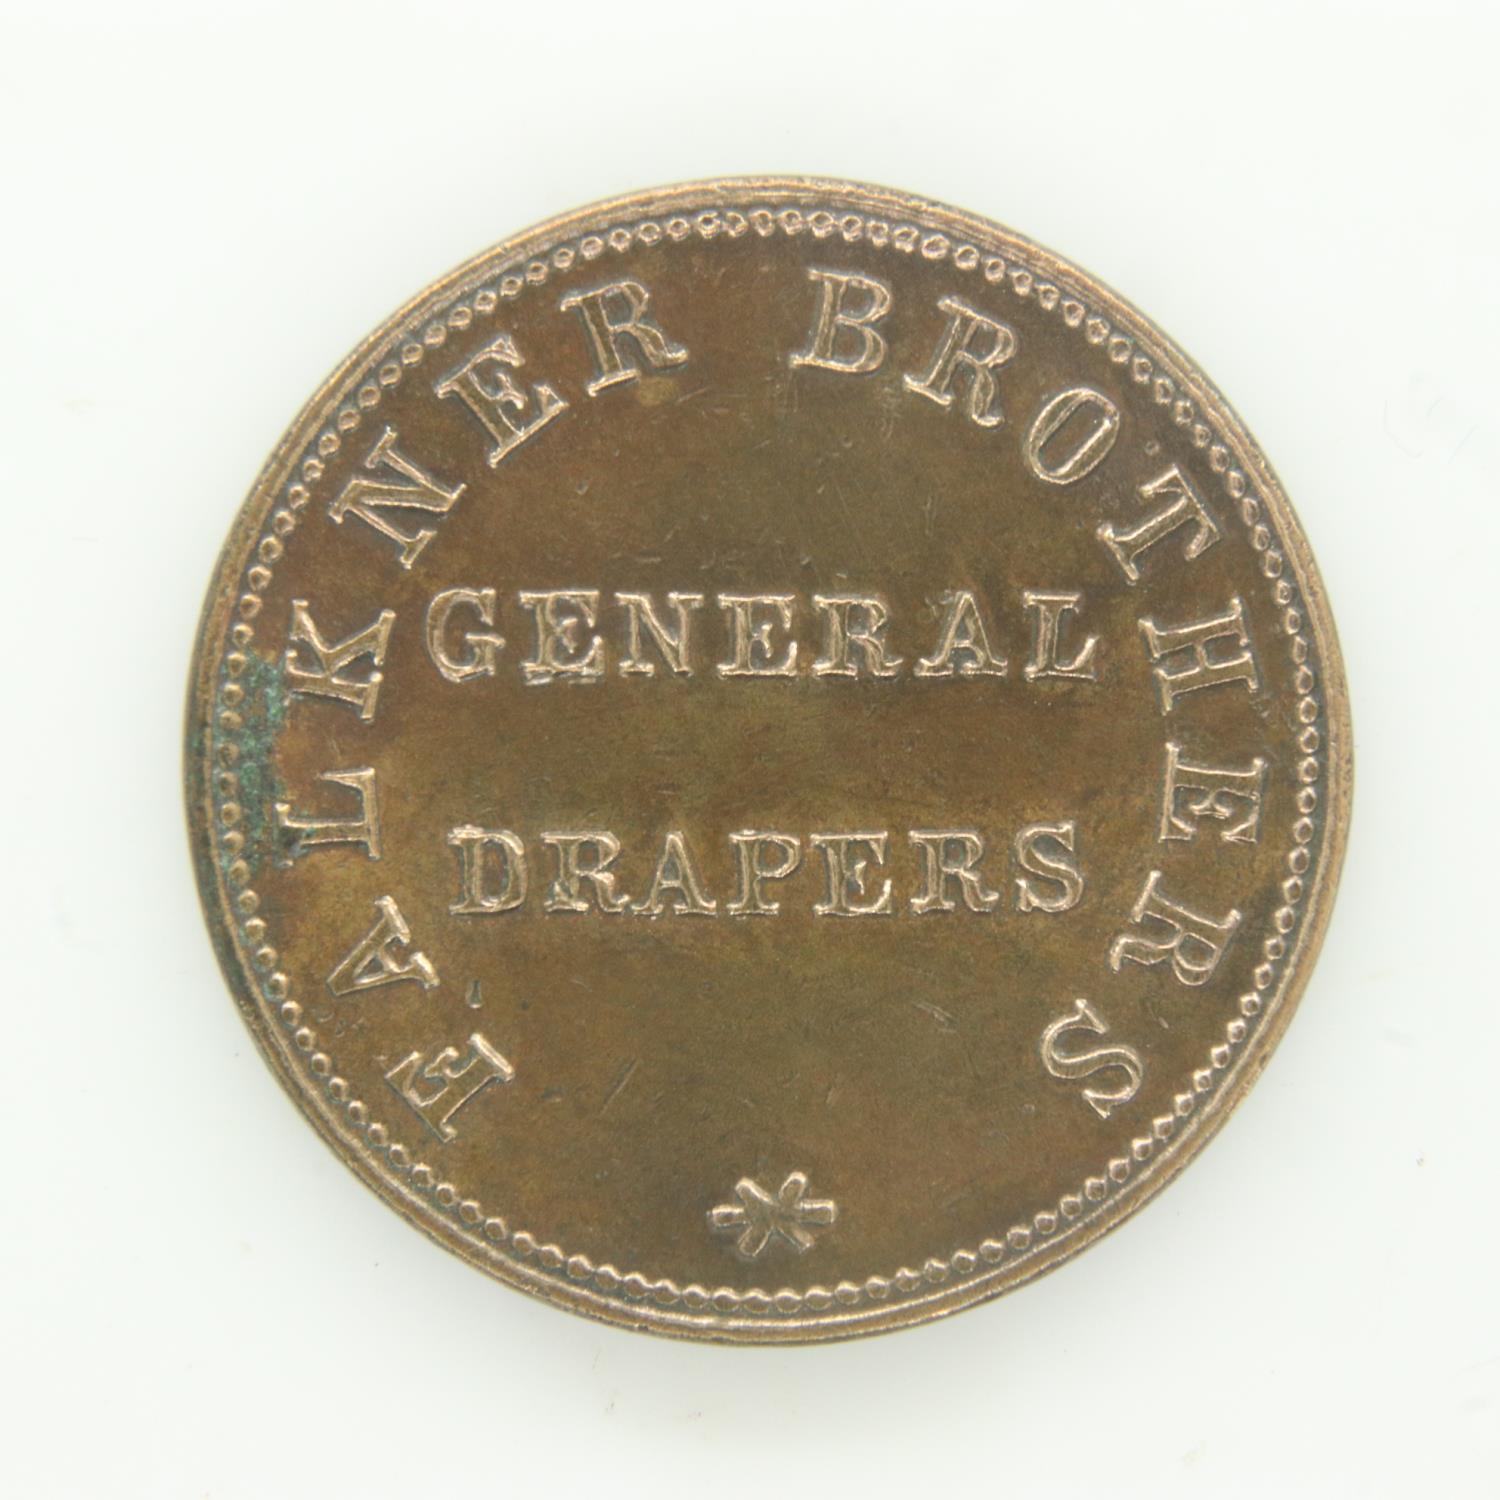 Stevenson square, Manchester farthing token for Falkner Brothers General Drapers - aEF grade. UK P&P - Image 2 of 2